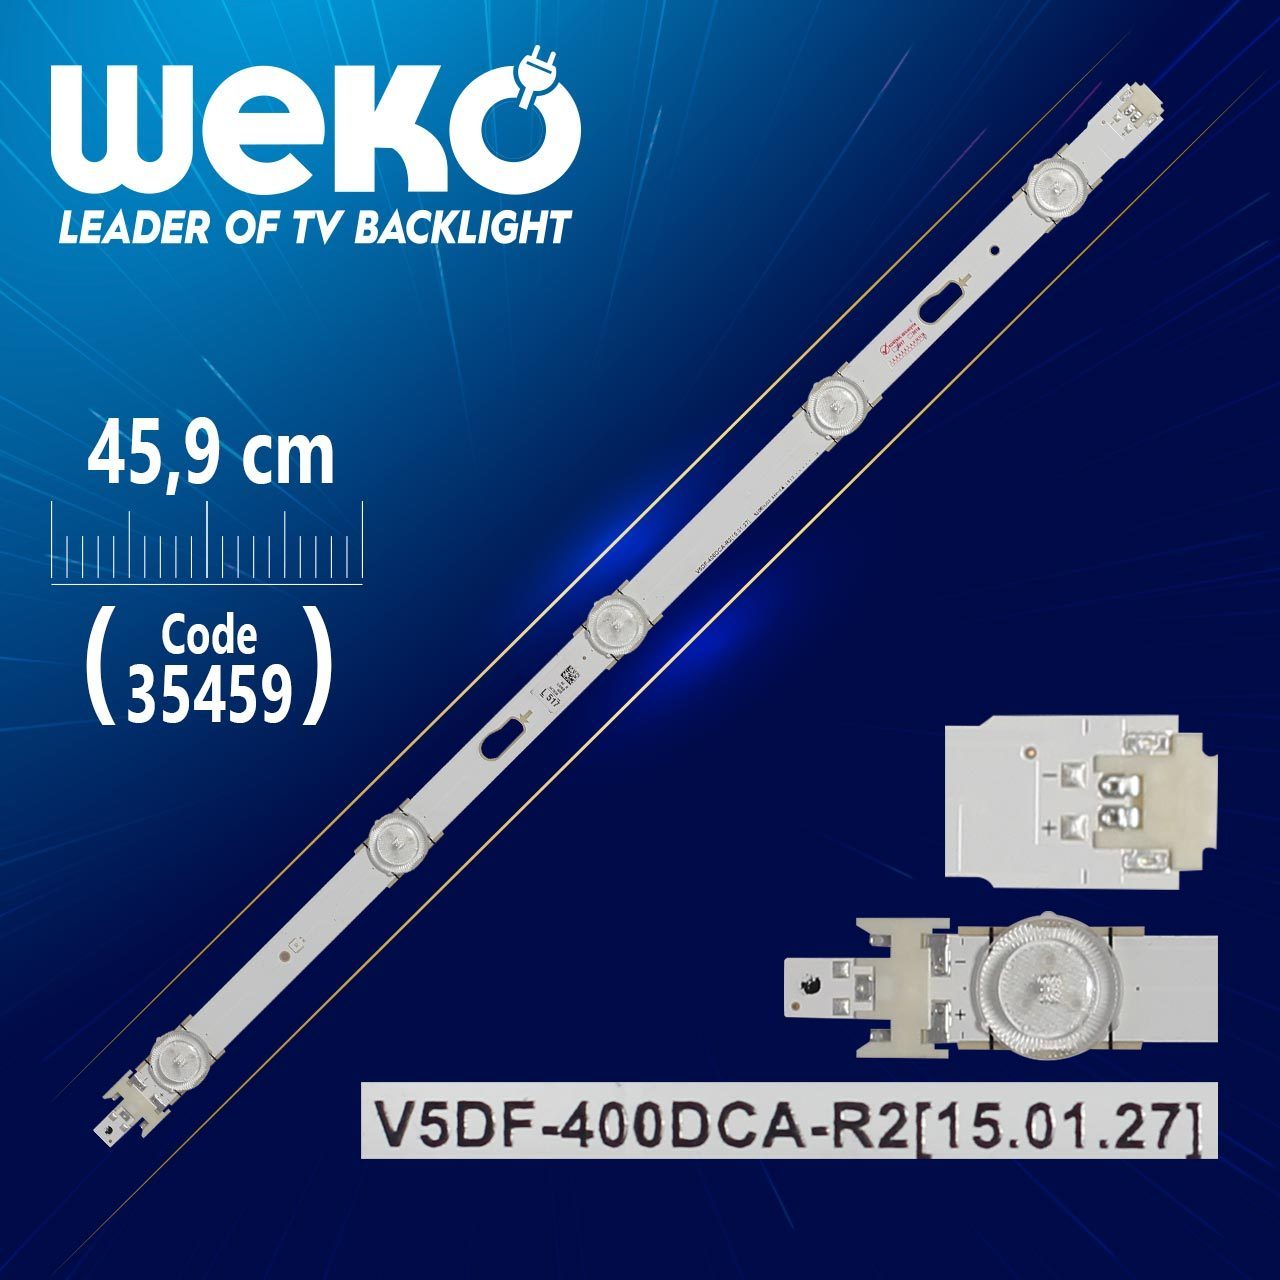 V5df-400dca-r2 - 45.9 Cm 5 Ledli - (wk-448) (4172)